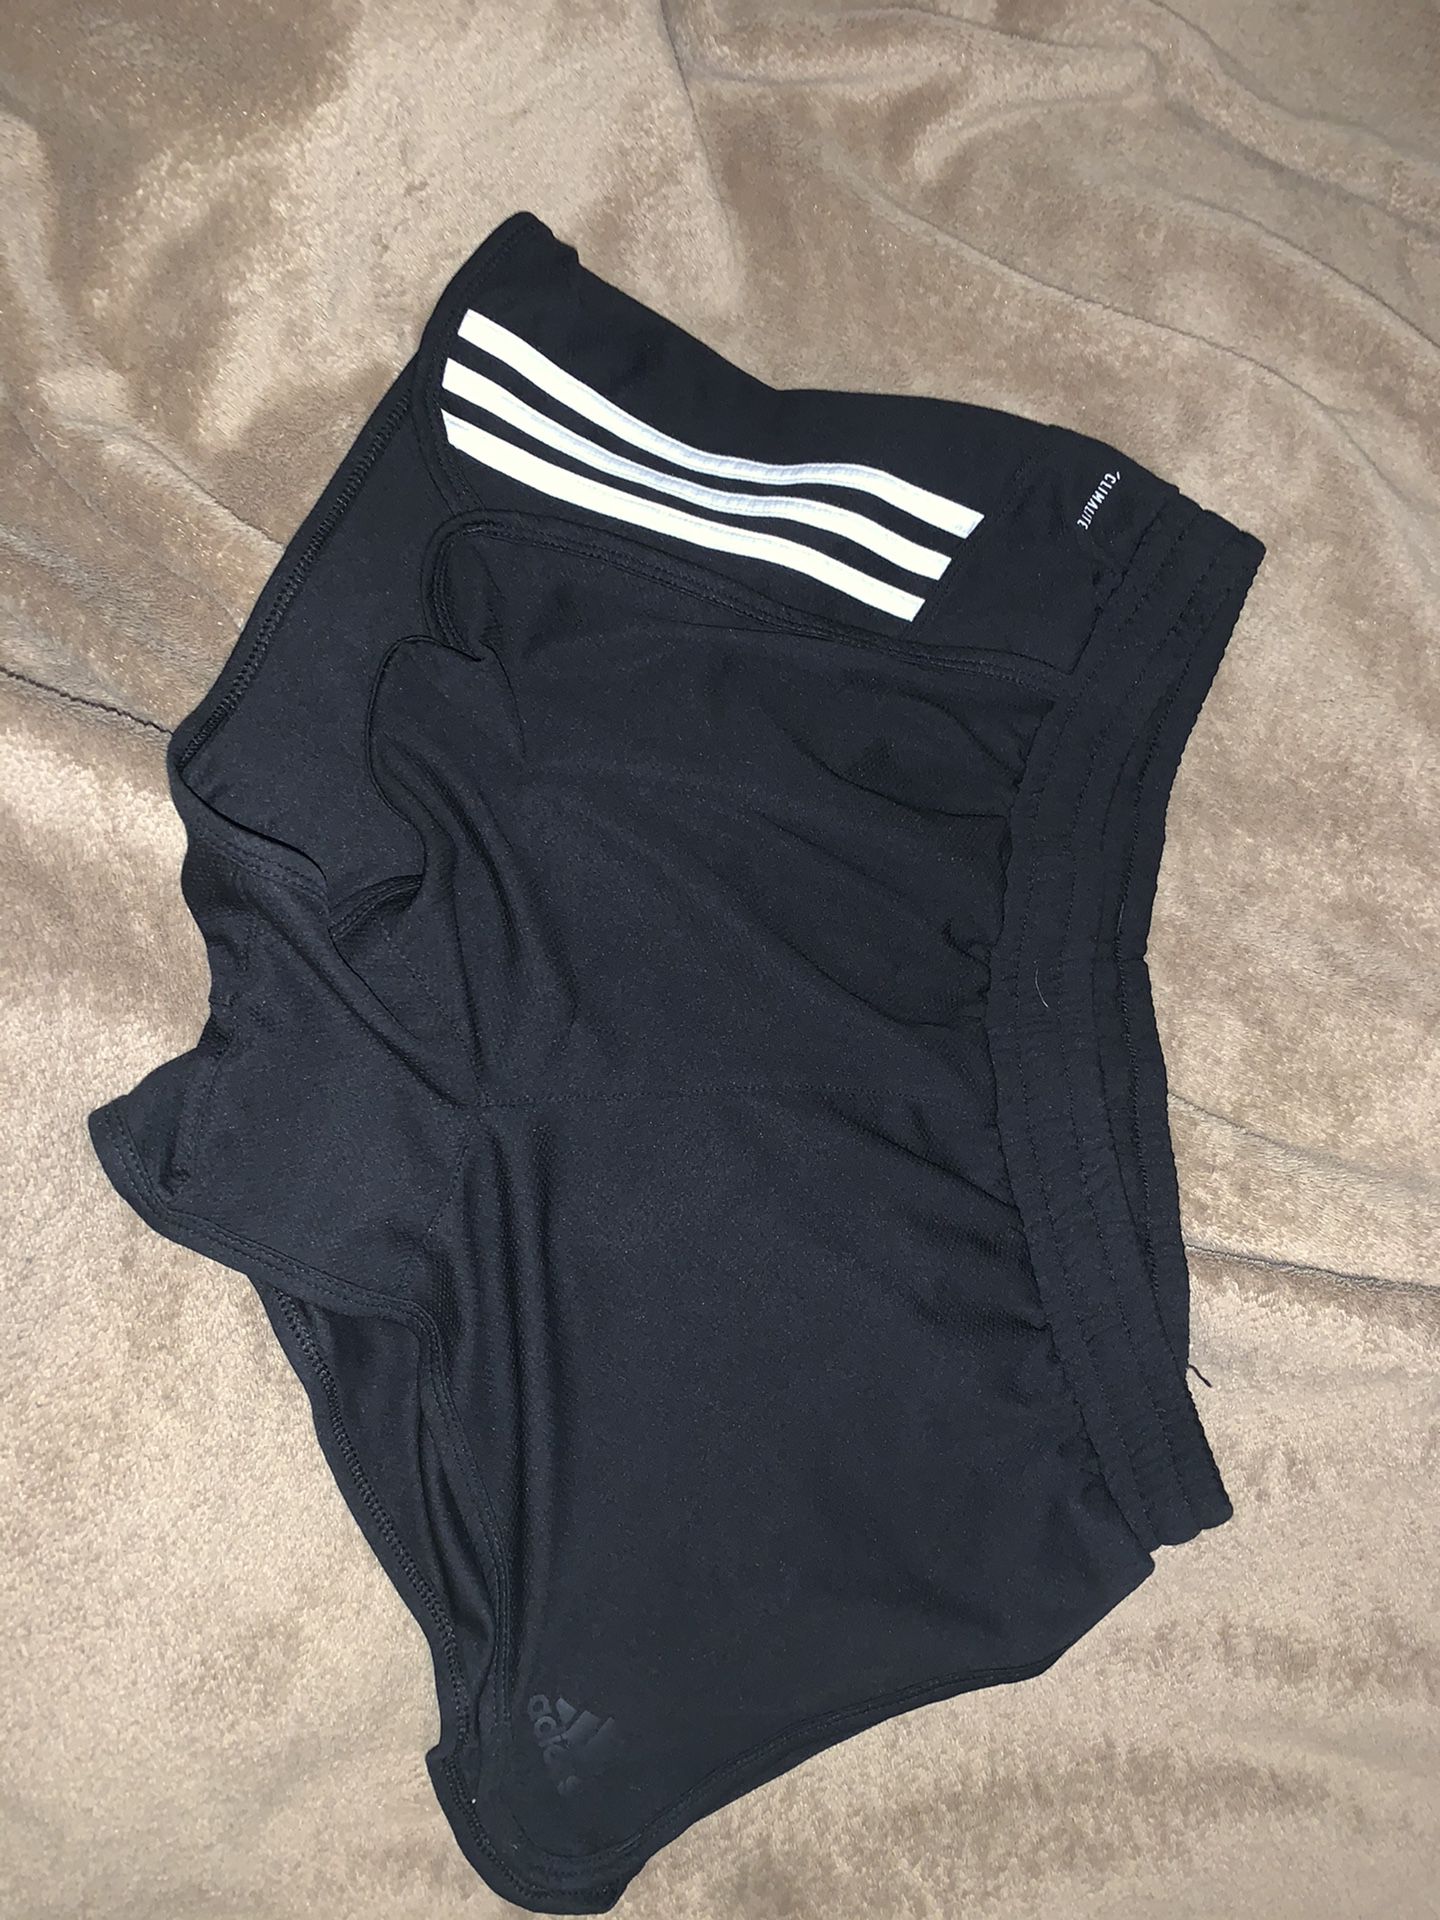 Adida shorts